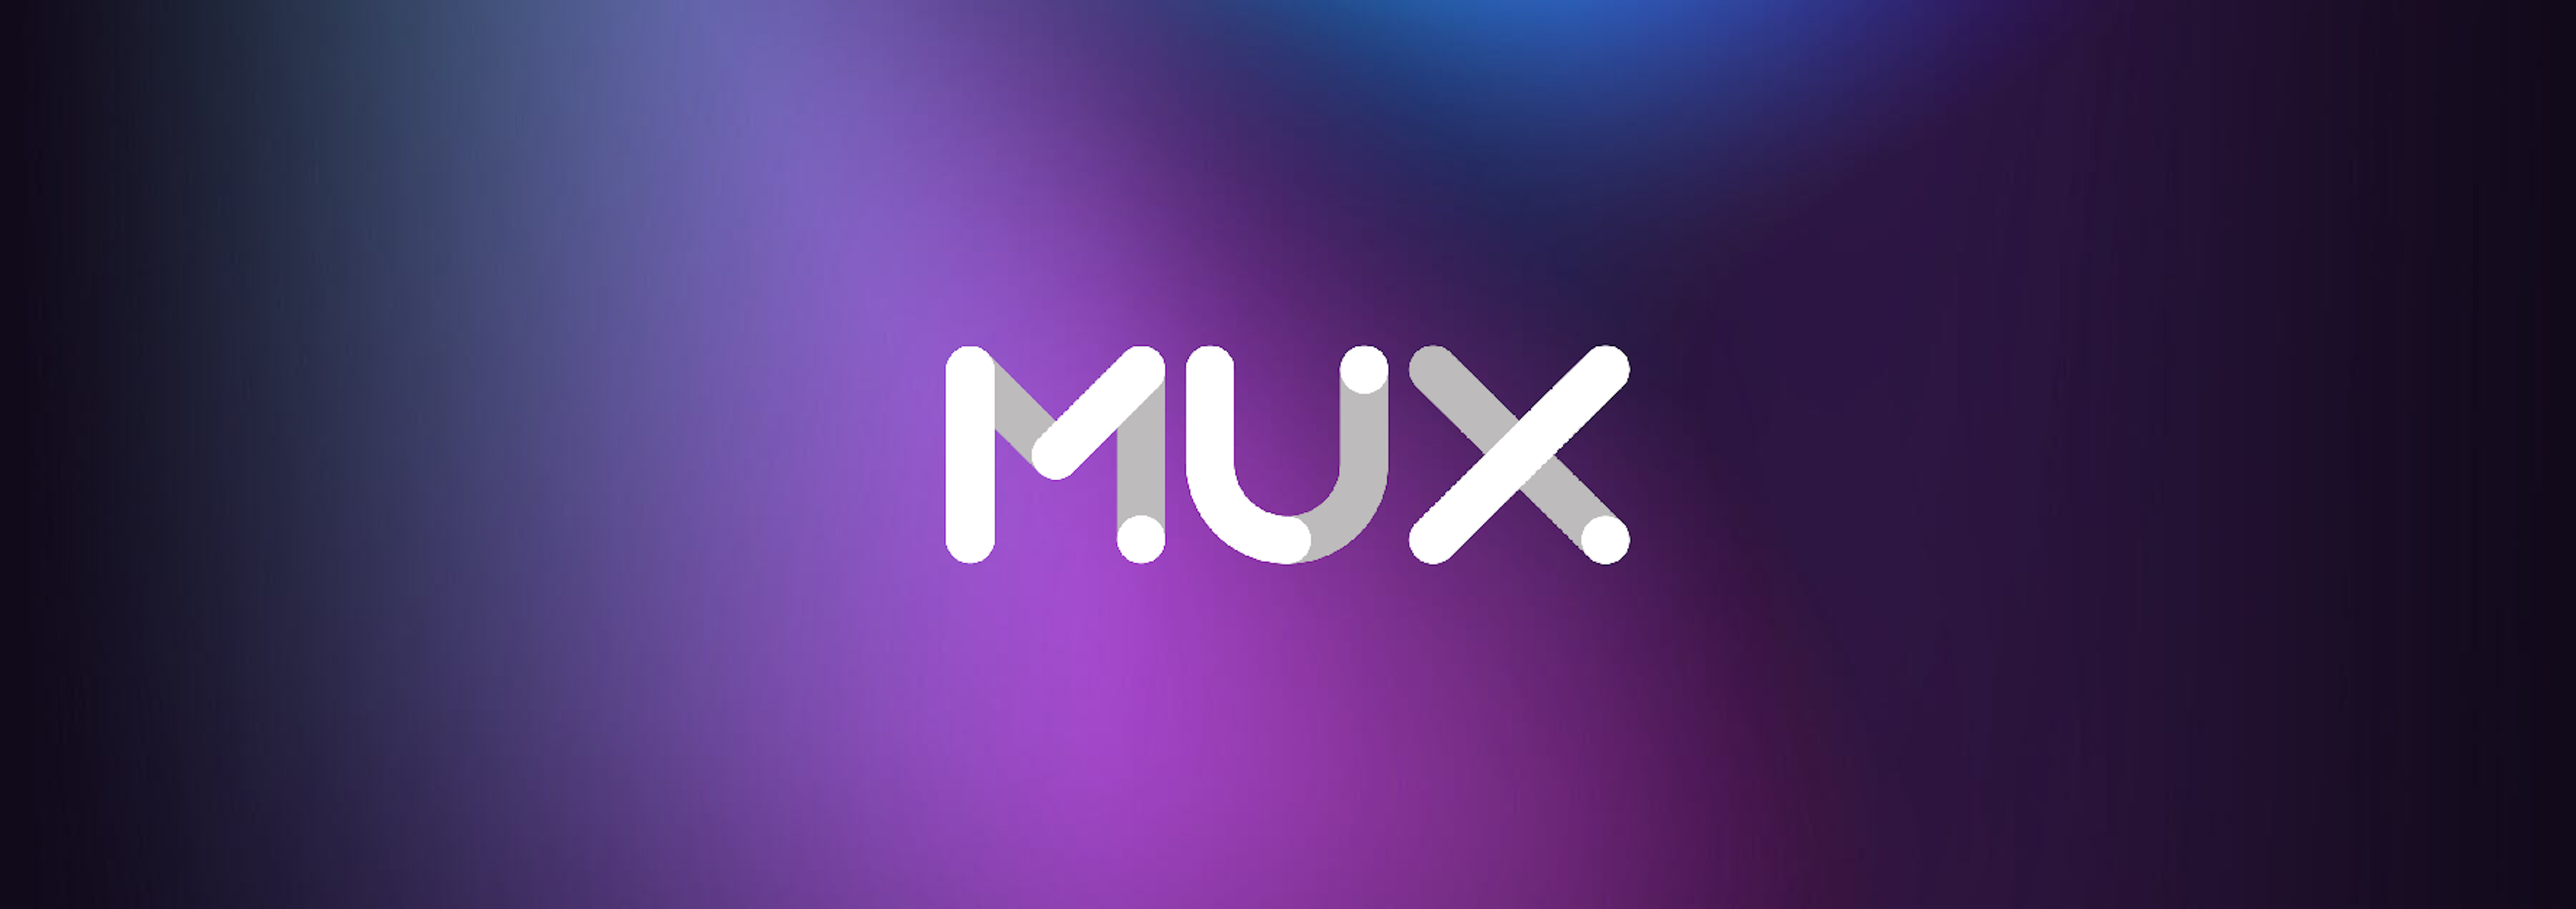 mux-thumbnail